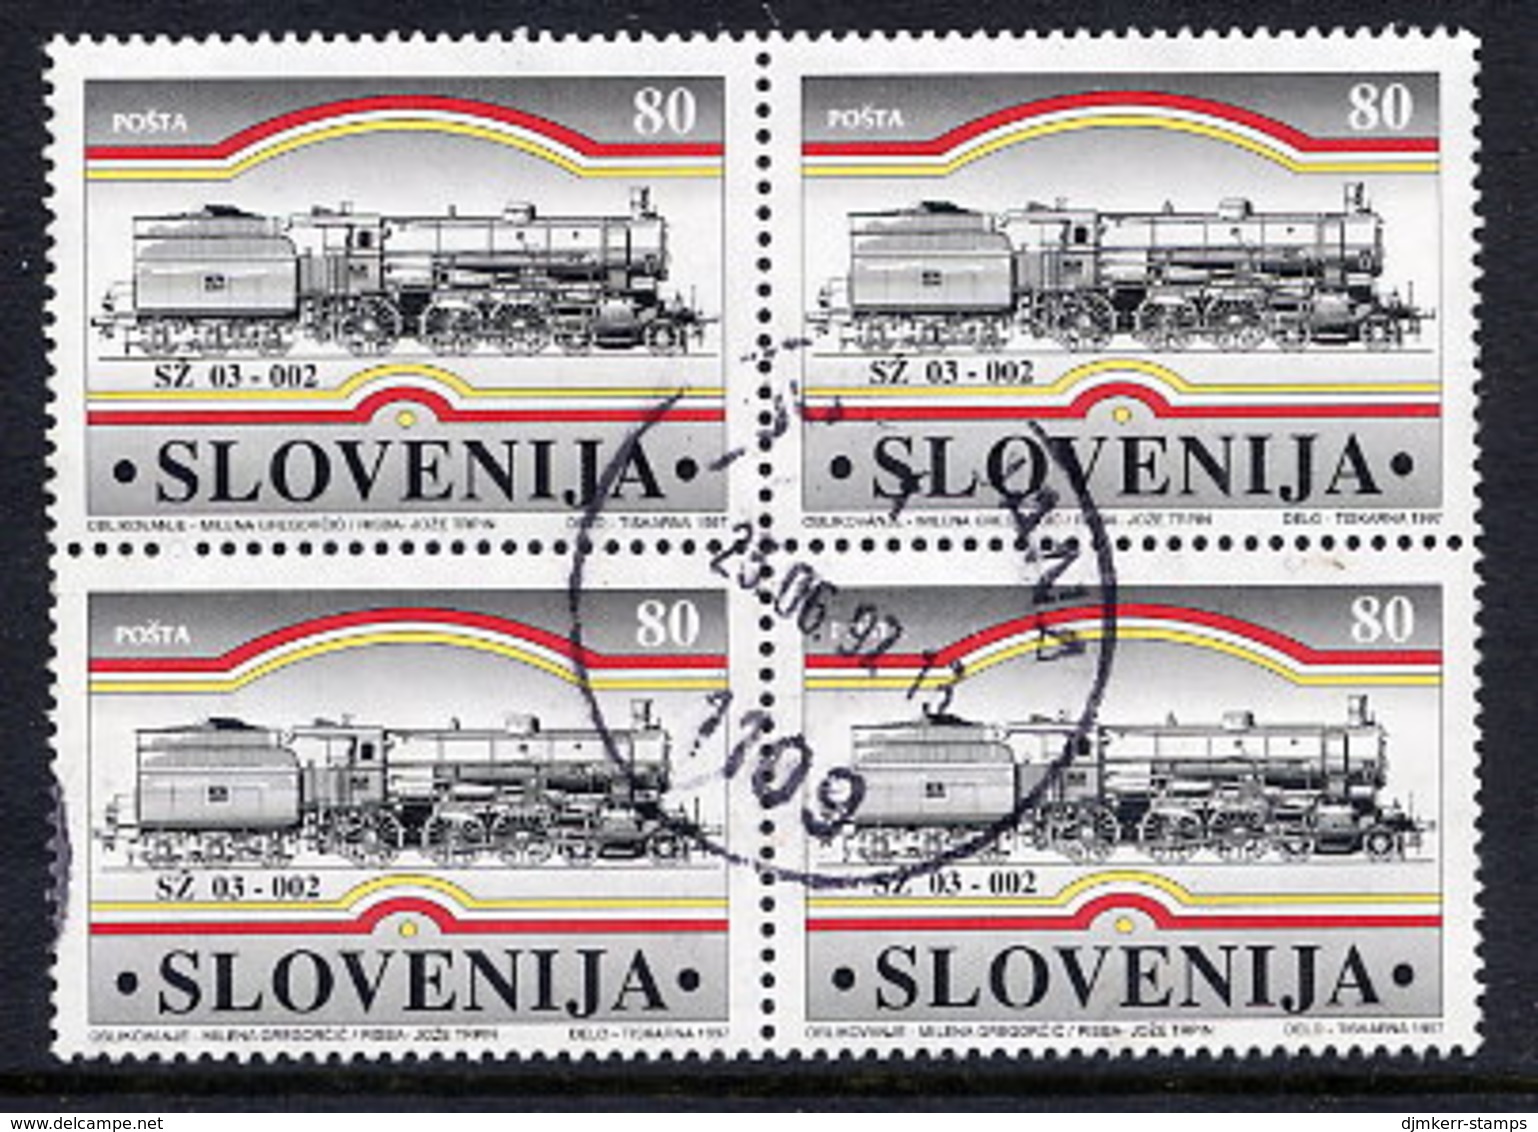 SLOVENIA 1997 Trieste Railway  Used Block Of 4.  Michel 188 - Slovenia